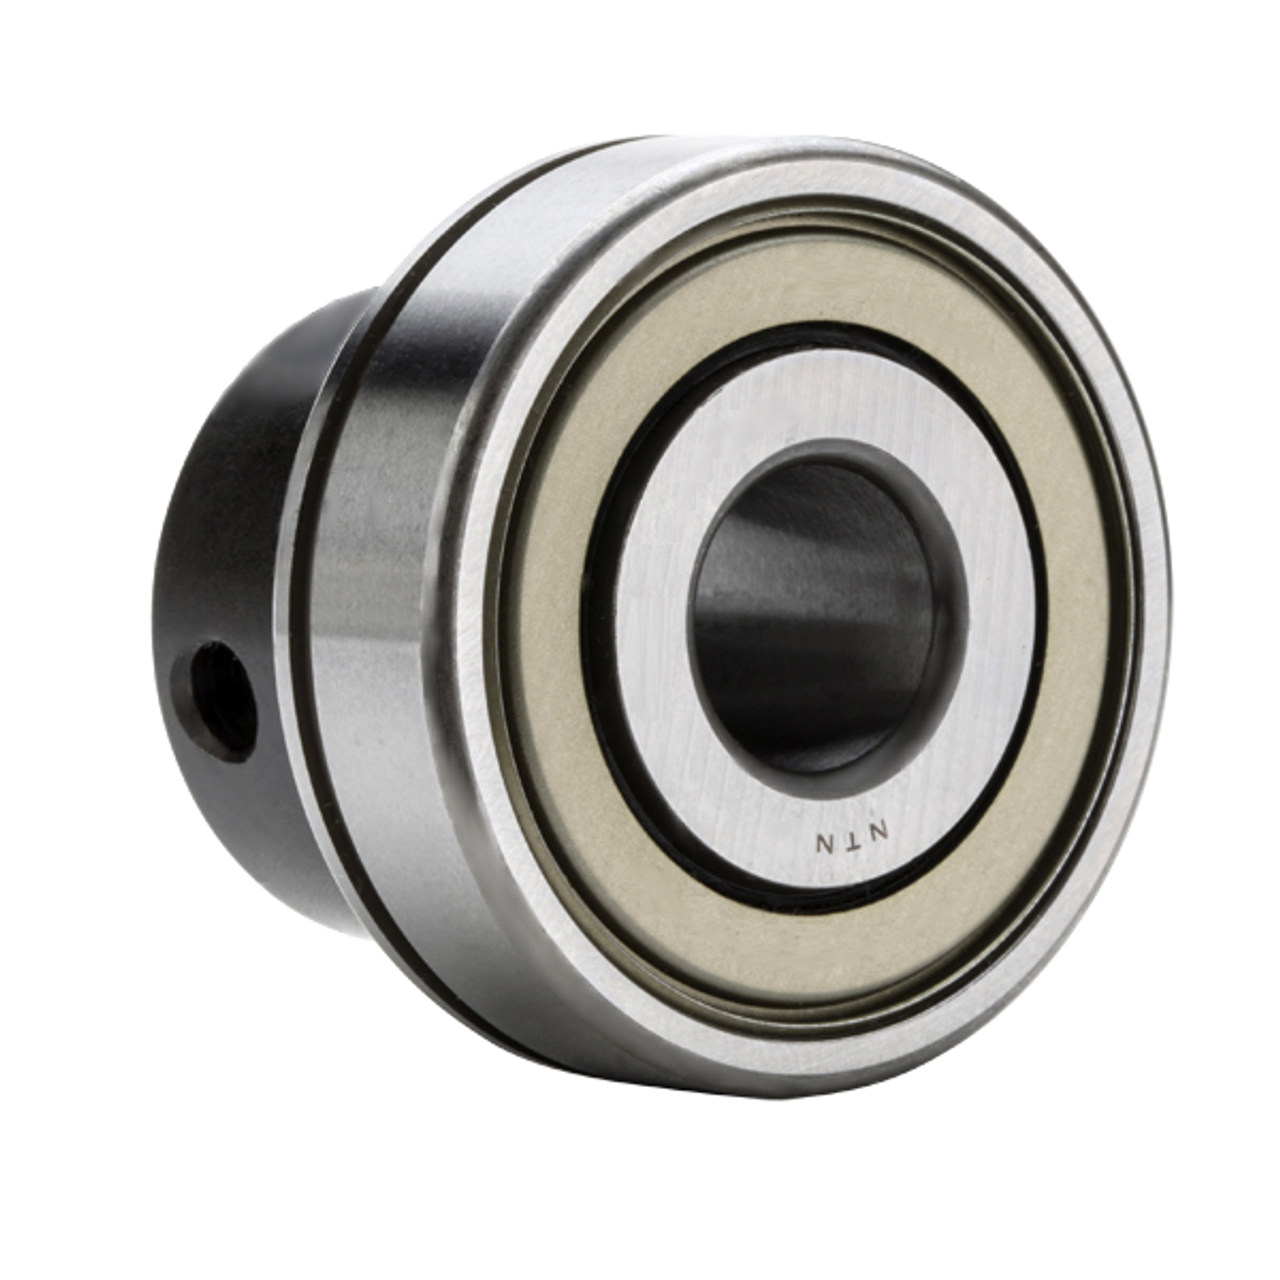 35mm Cylindrical Ball Bearing Insert w/Eccentric Lock Collar  AELS207N